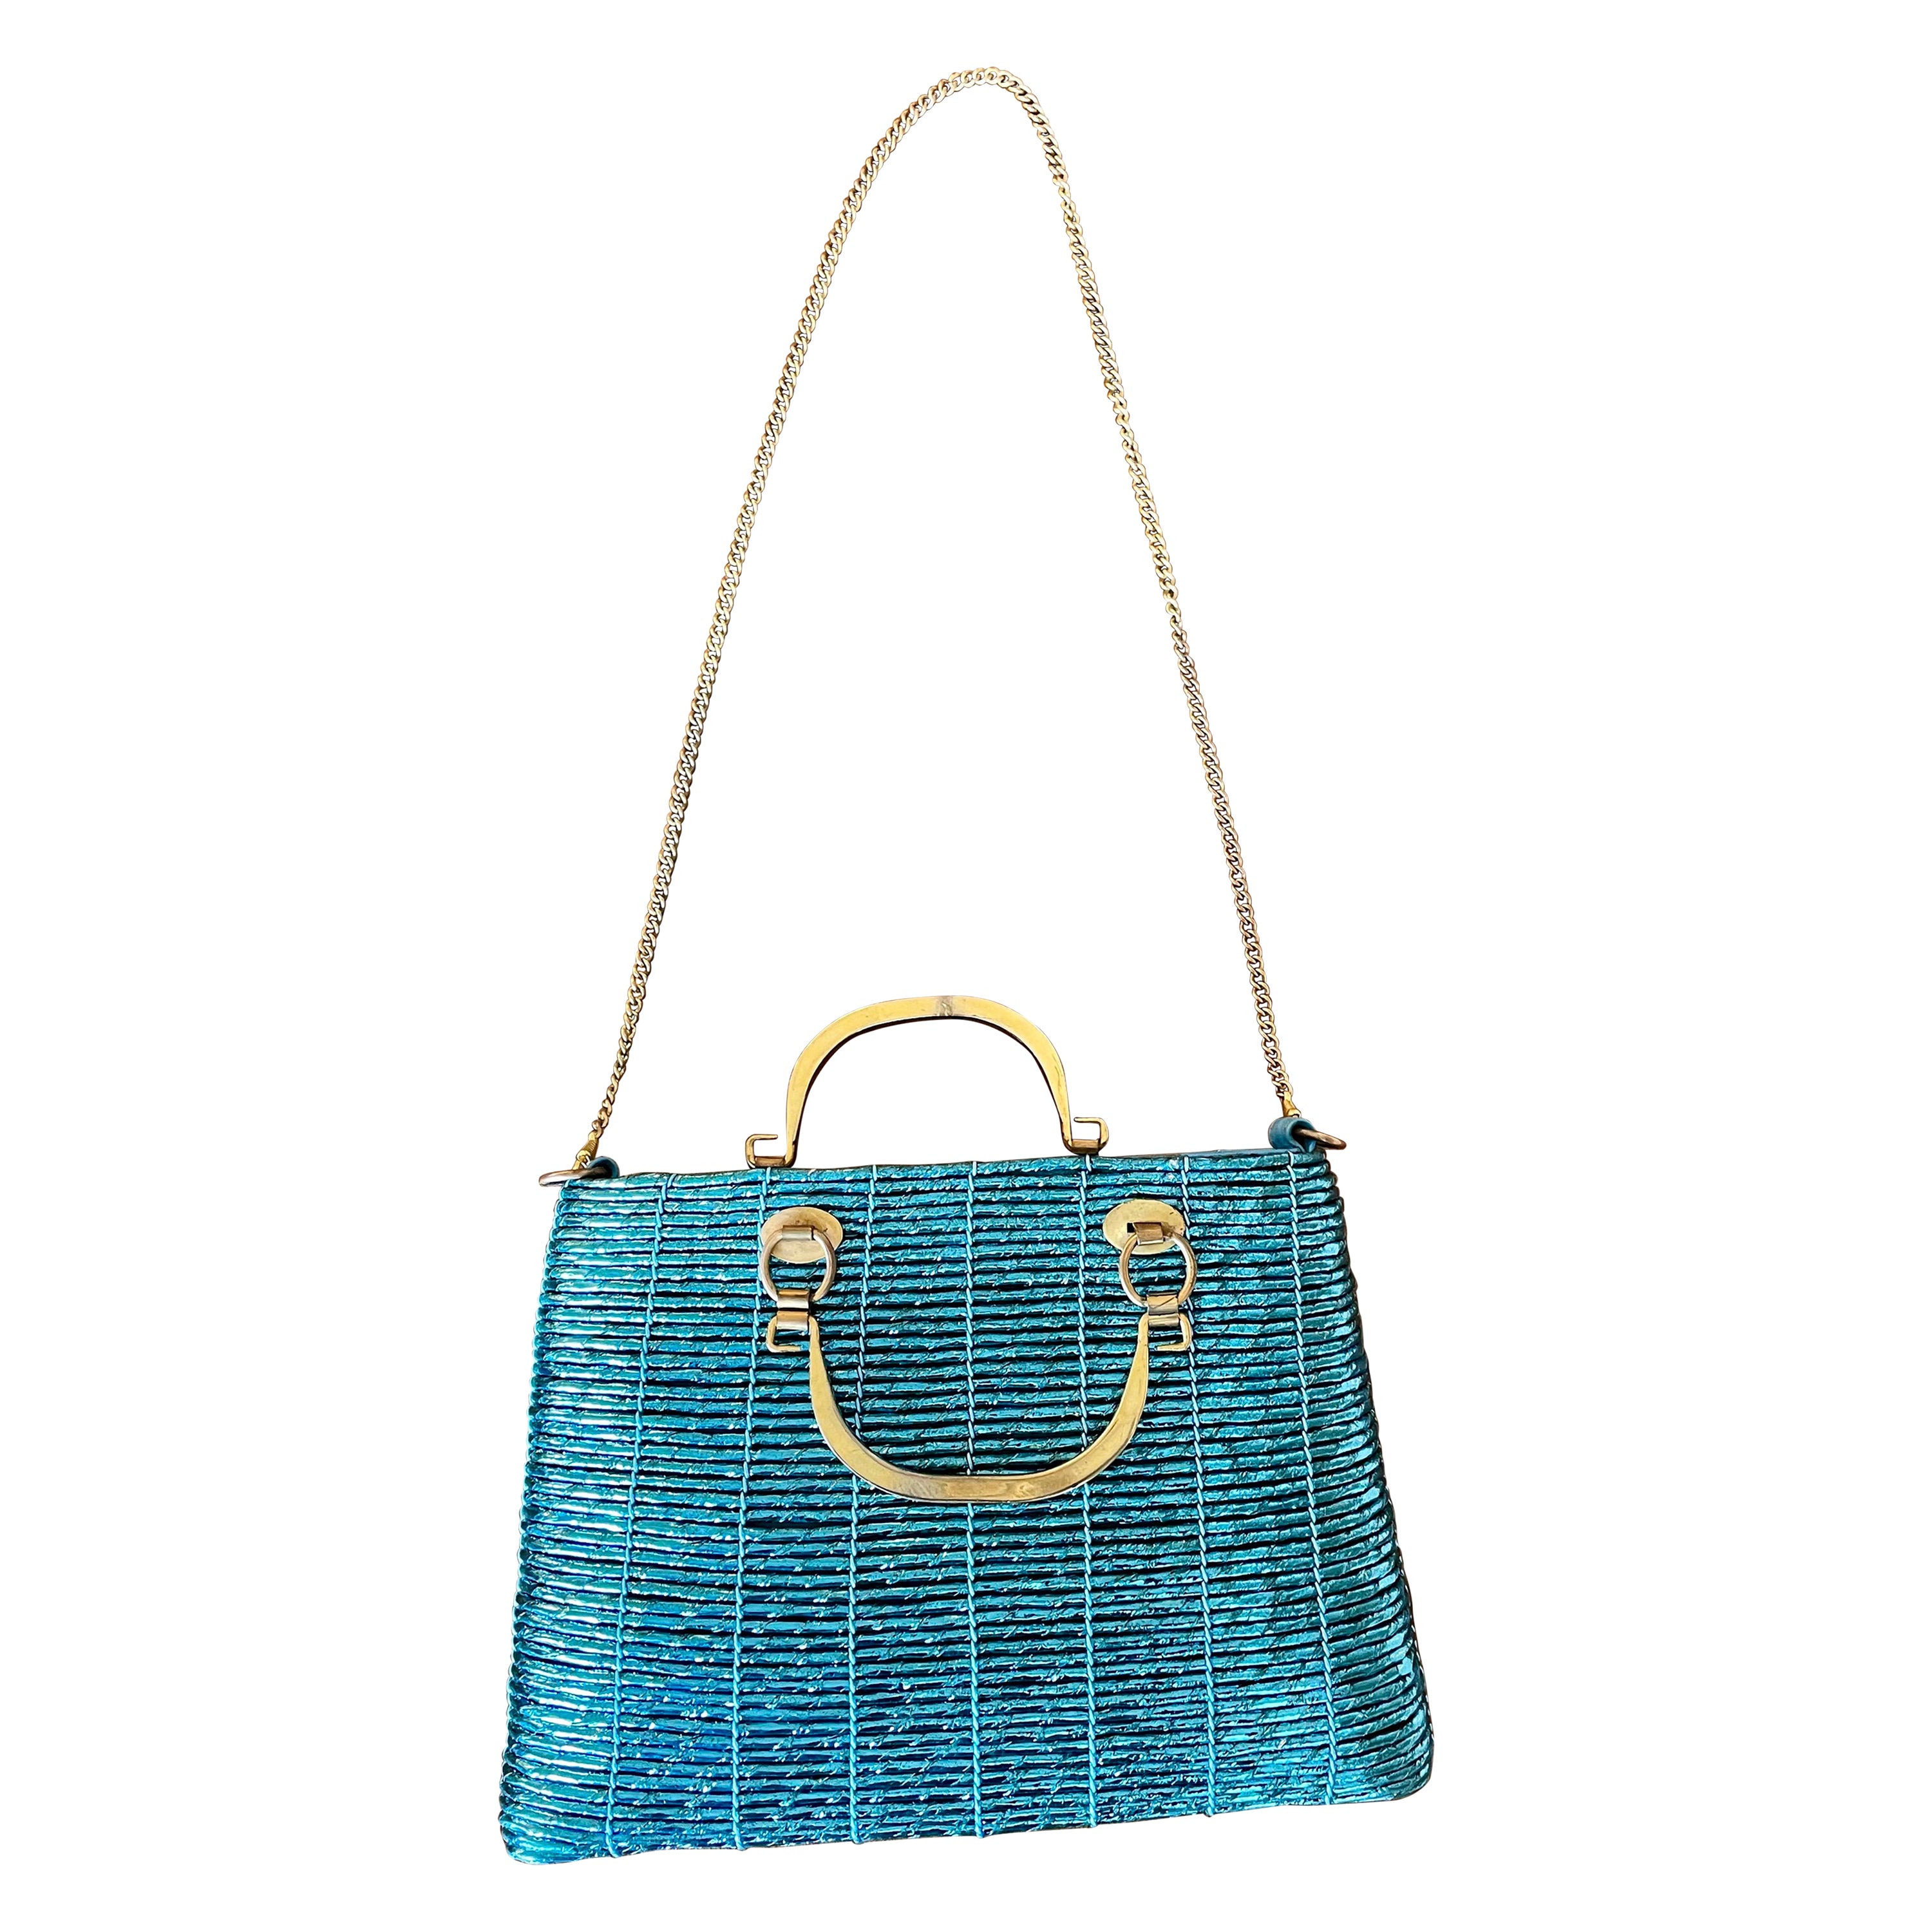 Roberta di camerino 50s turquoise bag For Sale